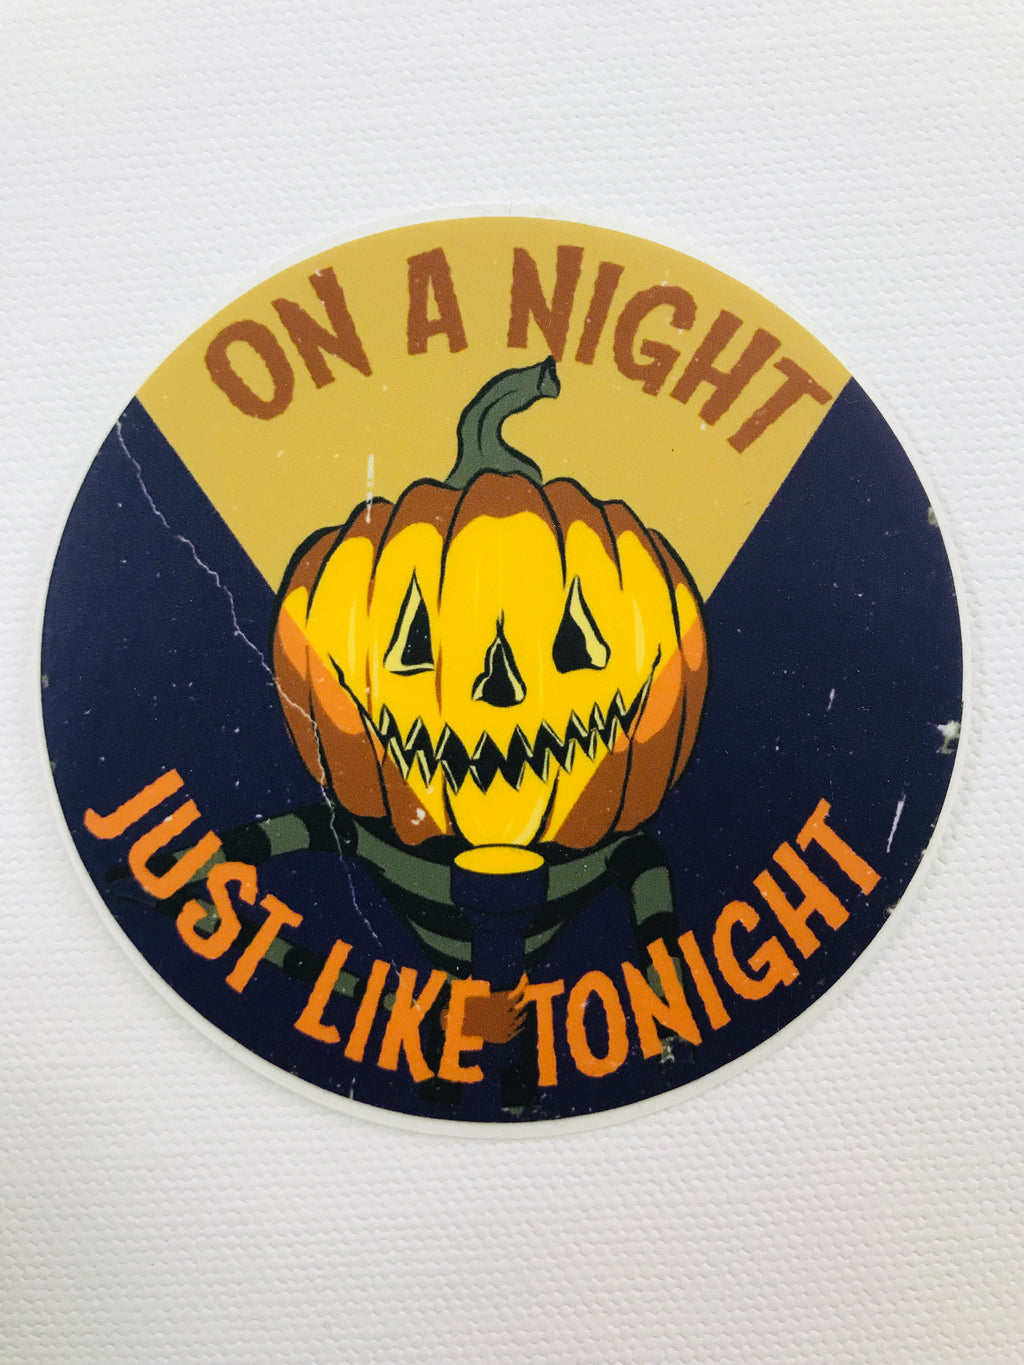 SALE! On a Night Just Like Tonight Sticker